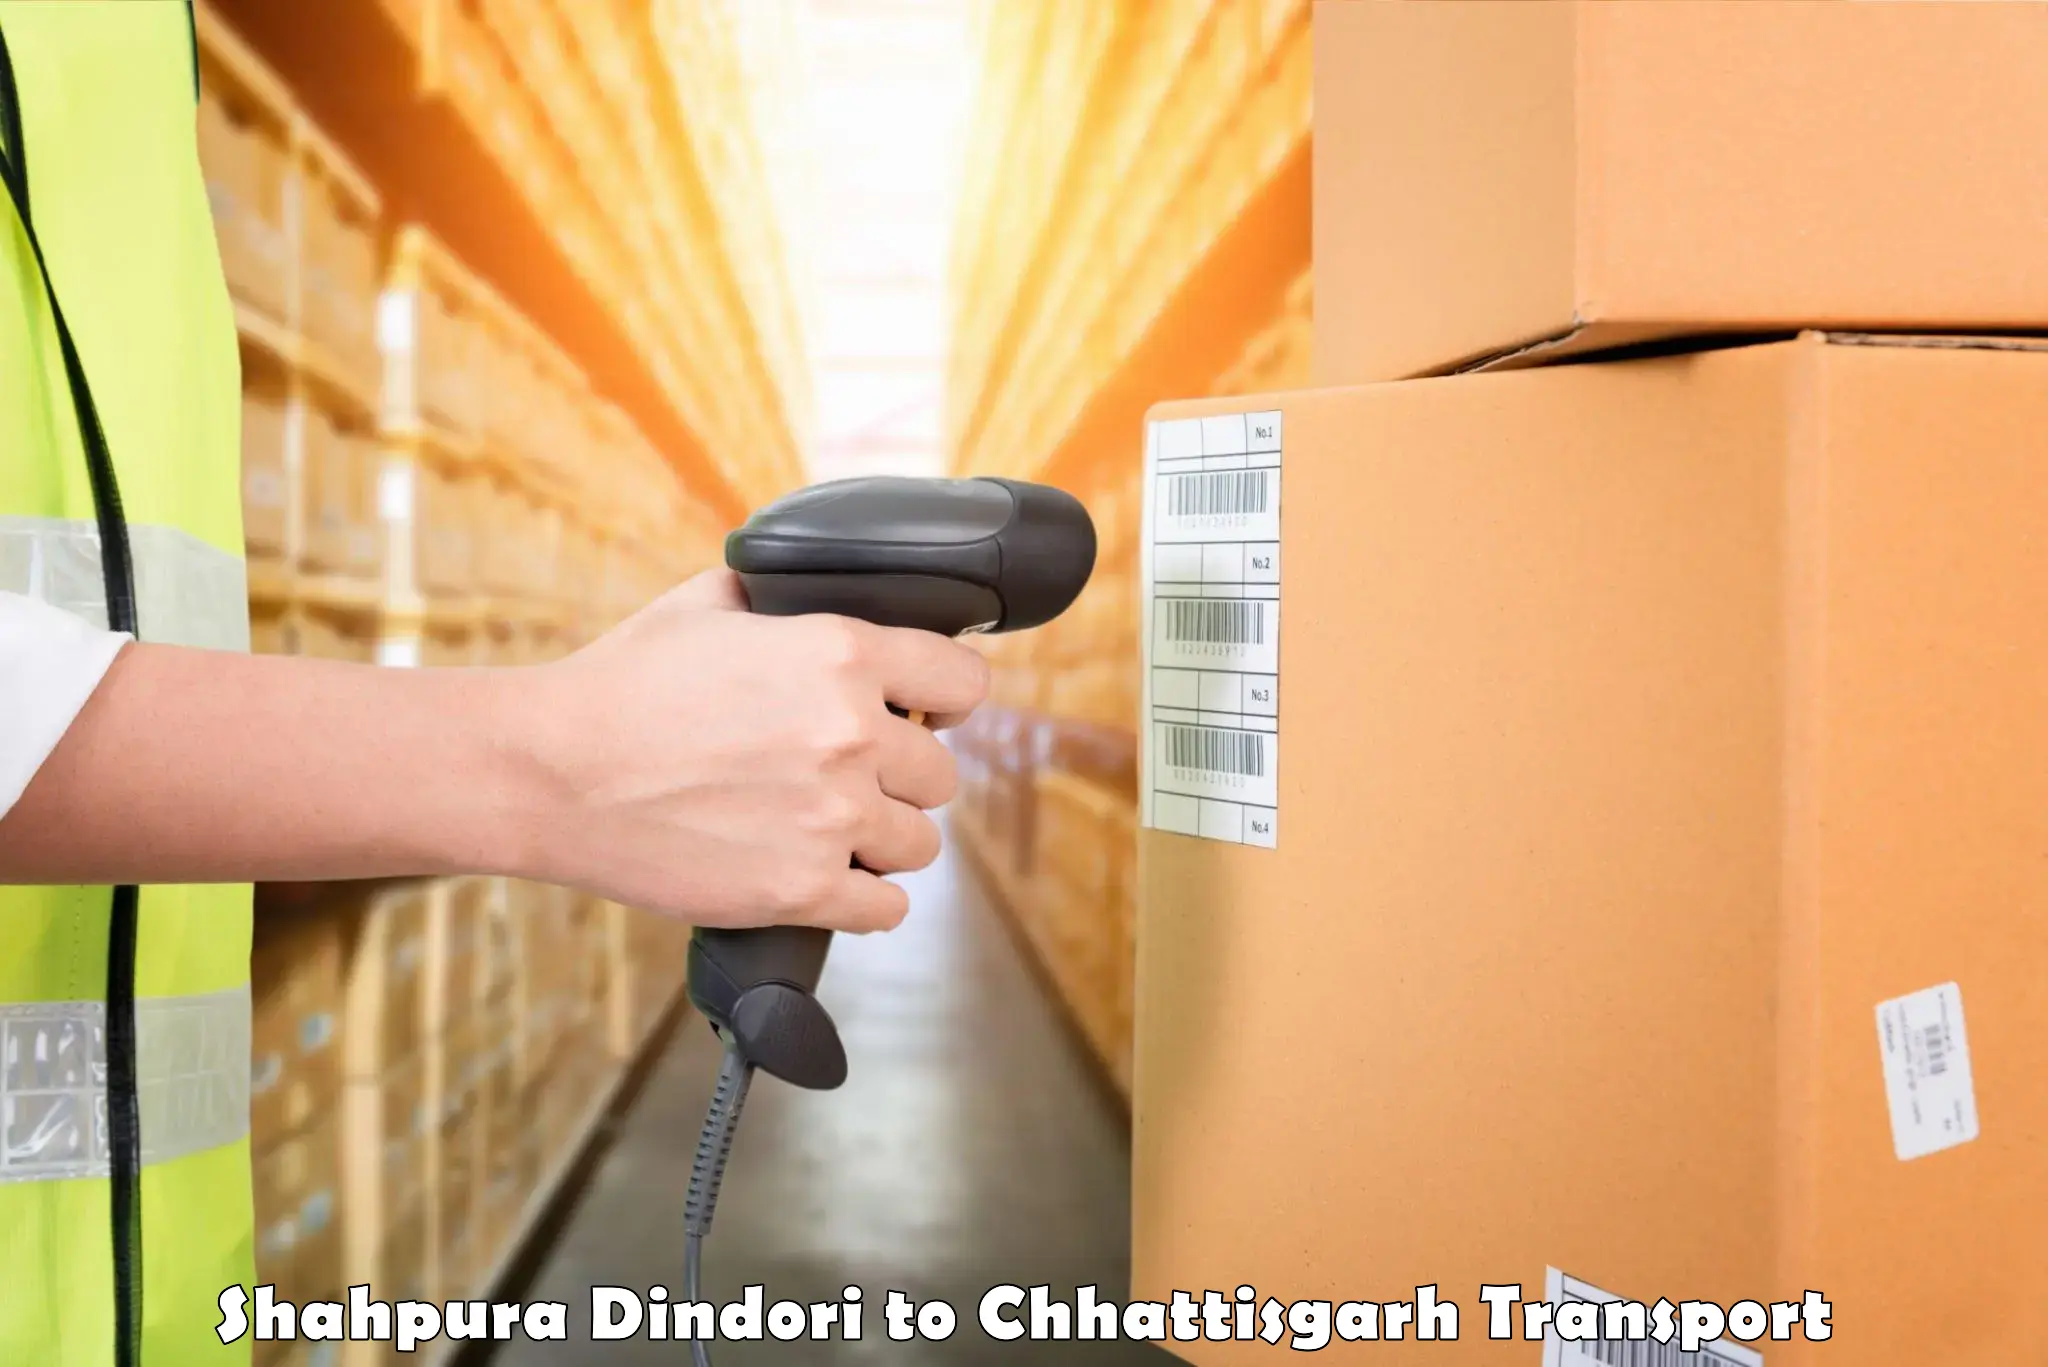 Truck transport companies in India Shahpura Dindori to Raigarh